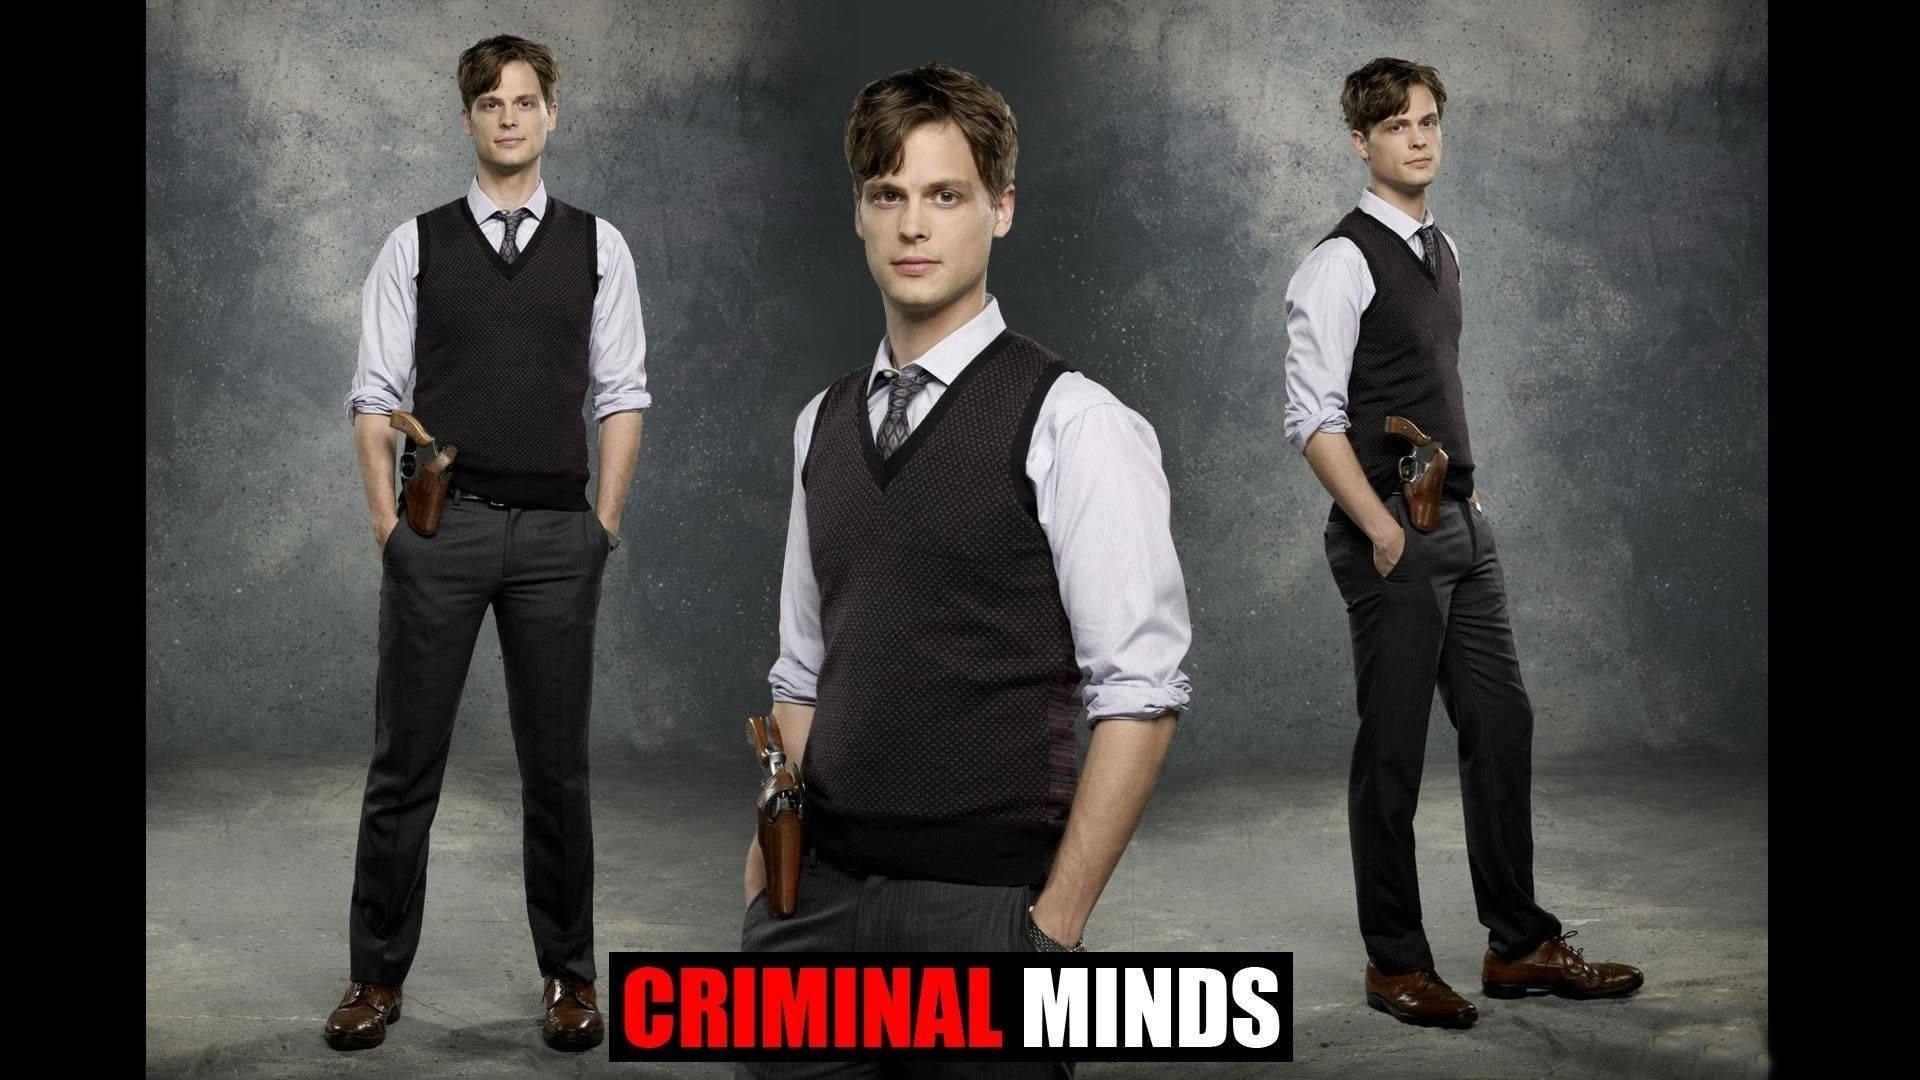 Matthew Gray Gubler's Pensive Stare In Criminal Minds Background